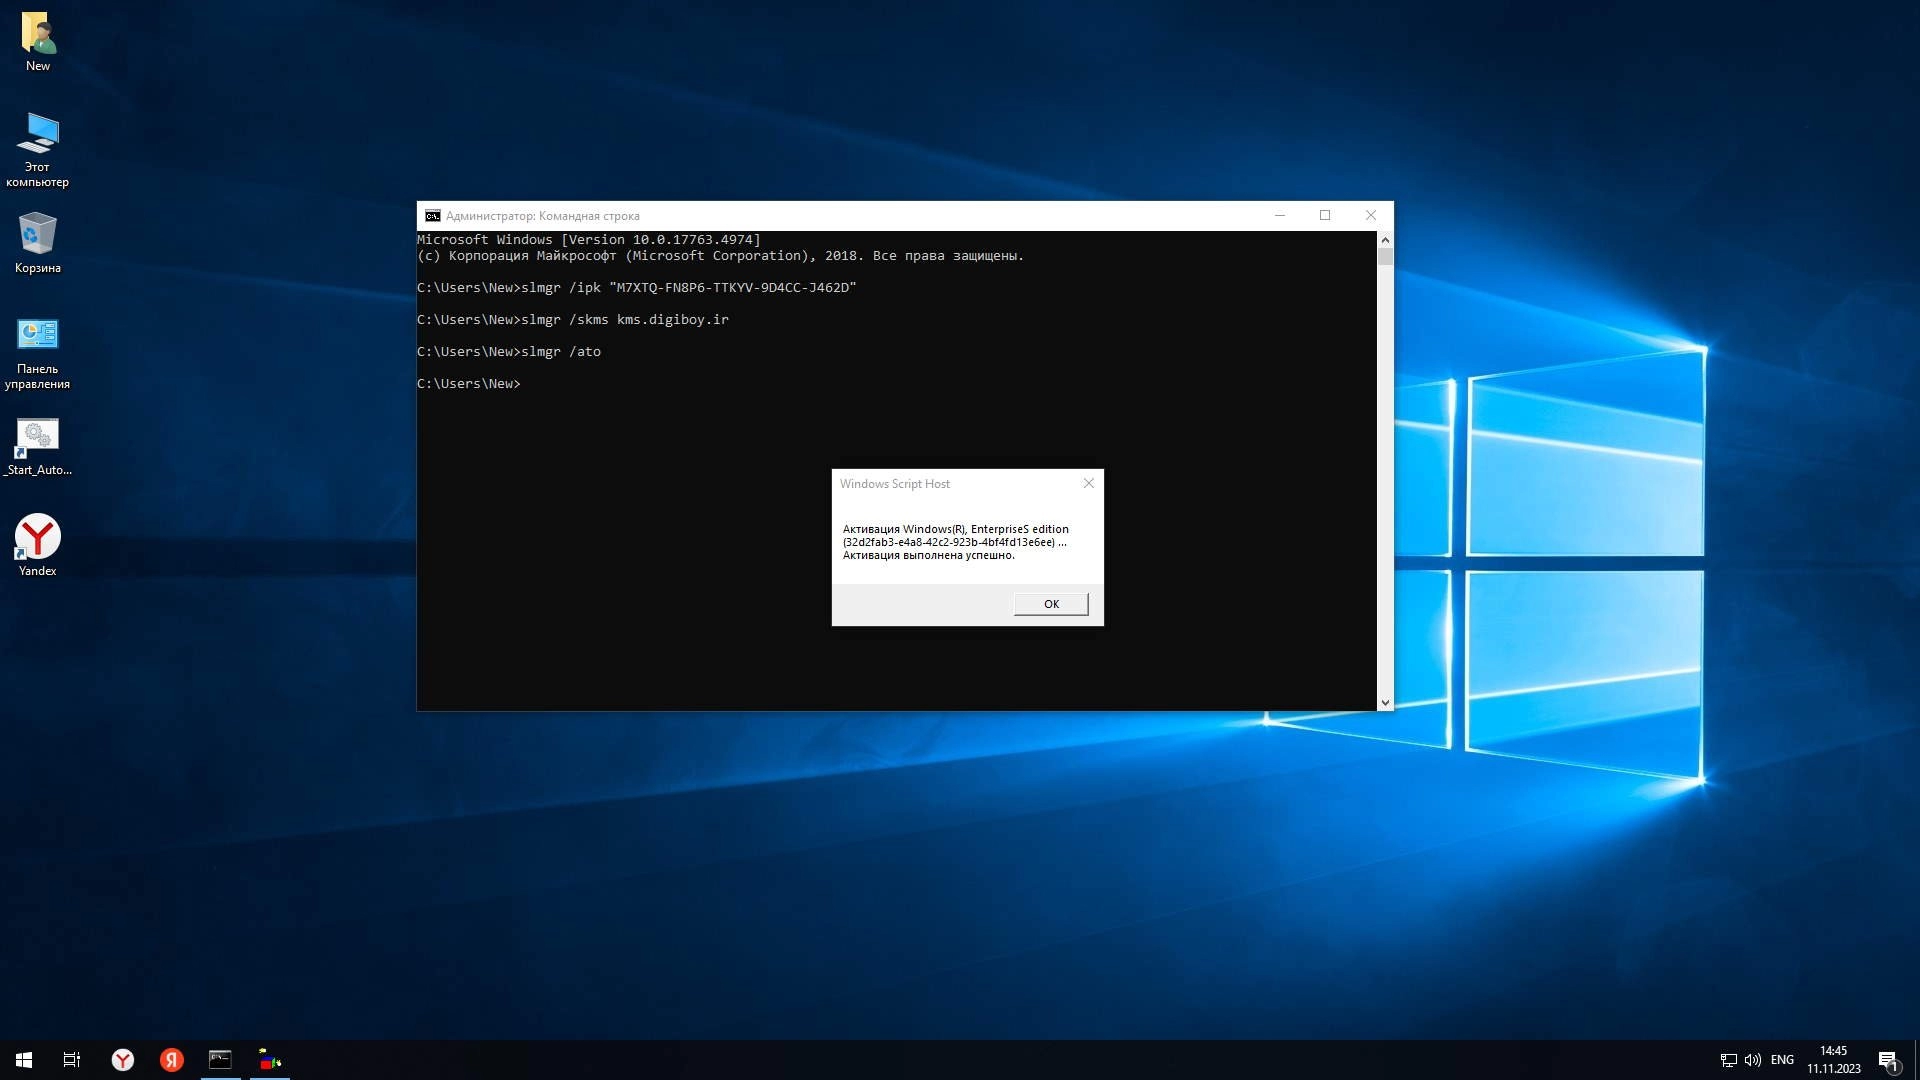 Windows 10 LTSC 1809 Build 17763.4974 x64 + Lite